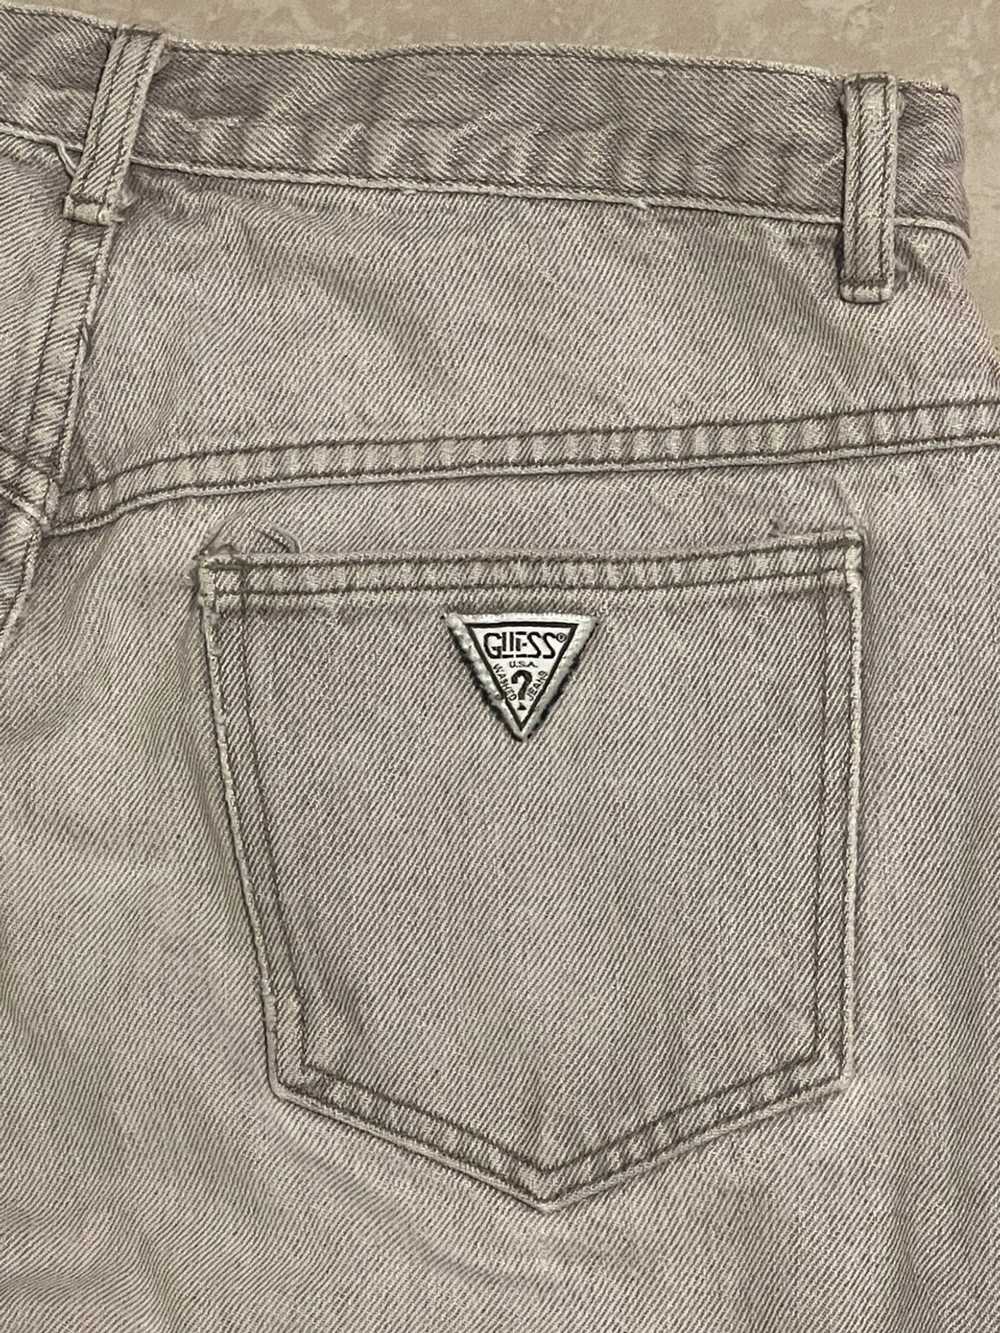 Japanese Brand × Vintage Vintage Guess Baggy Jeans - image 3